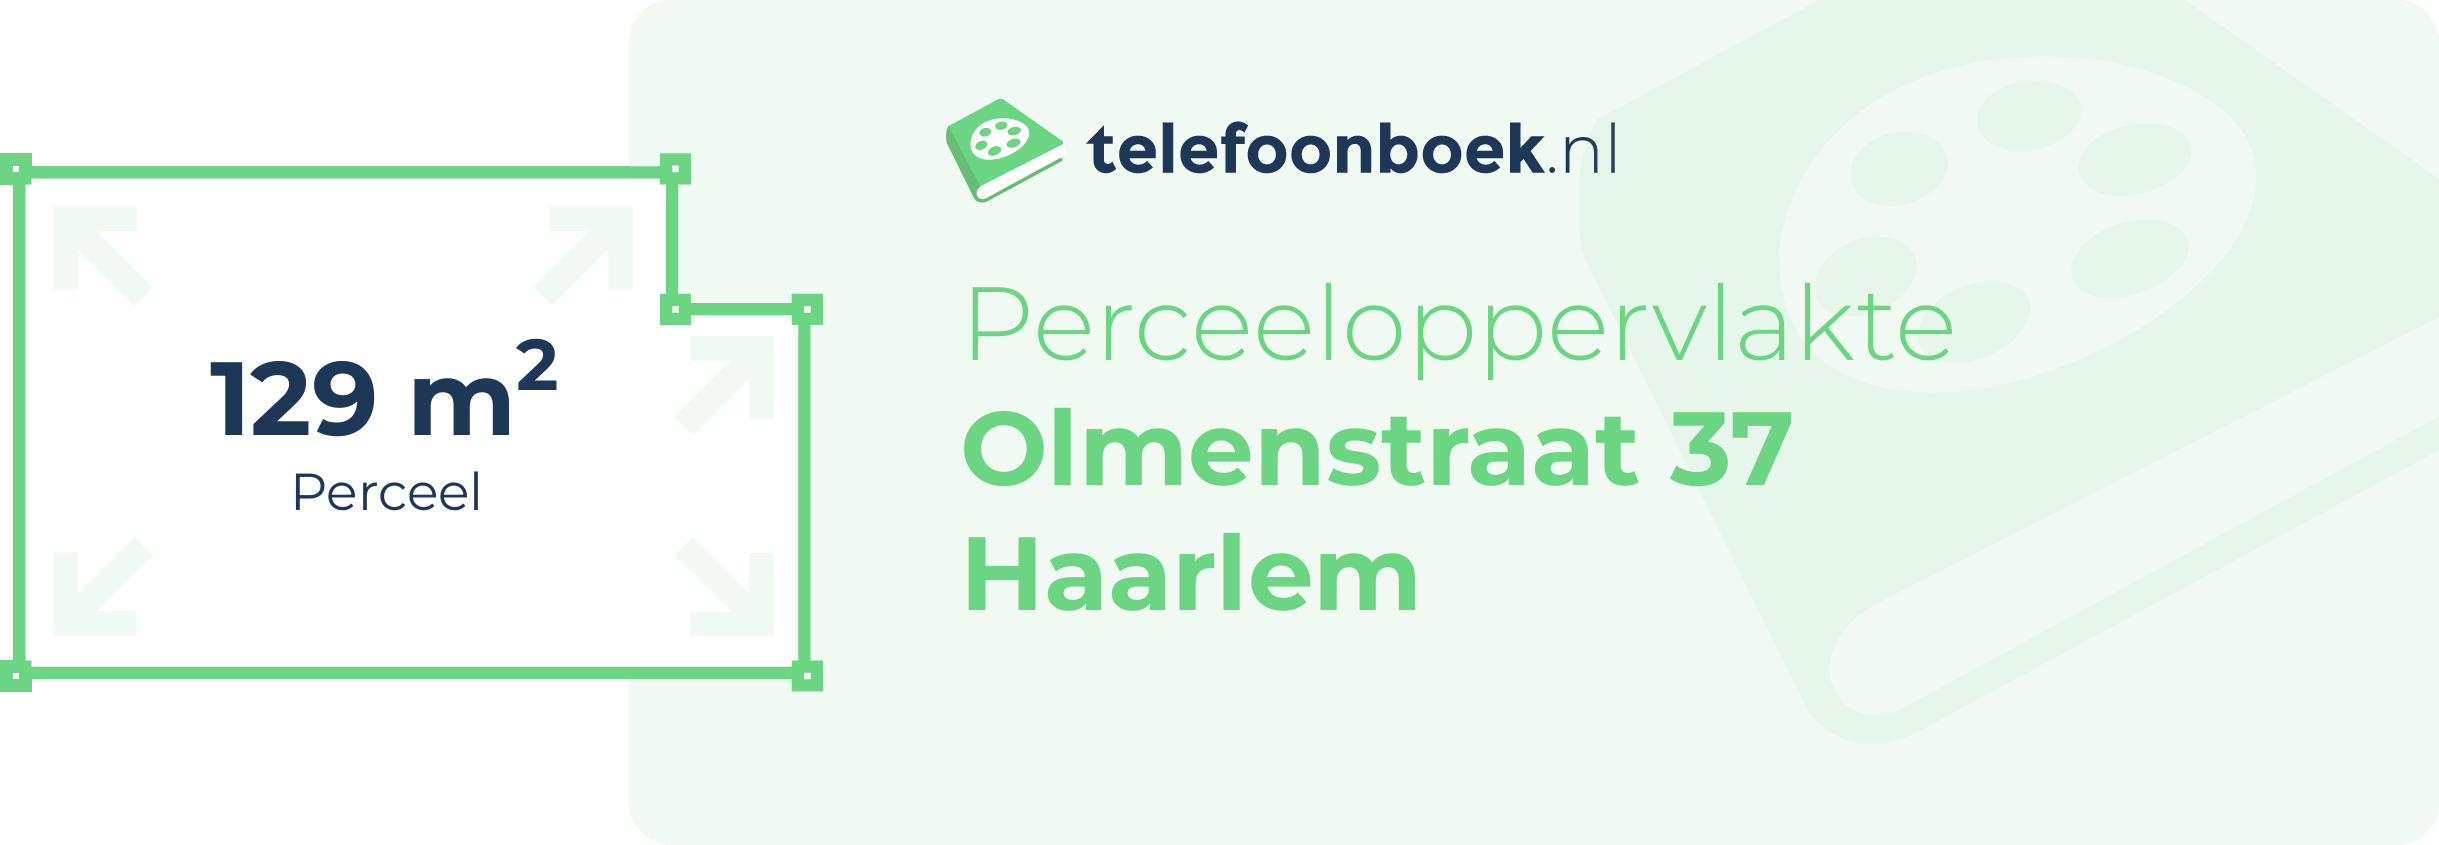 Perceeloppervlakte Olmenstraat 37 Haarlem